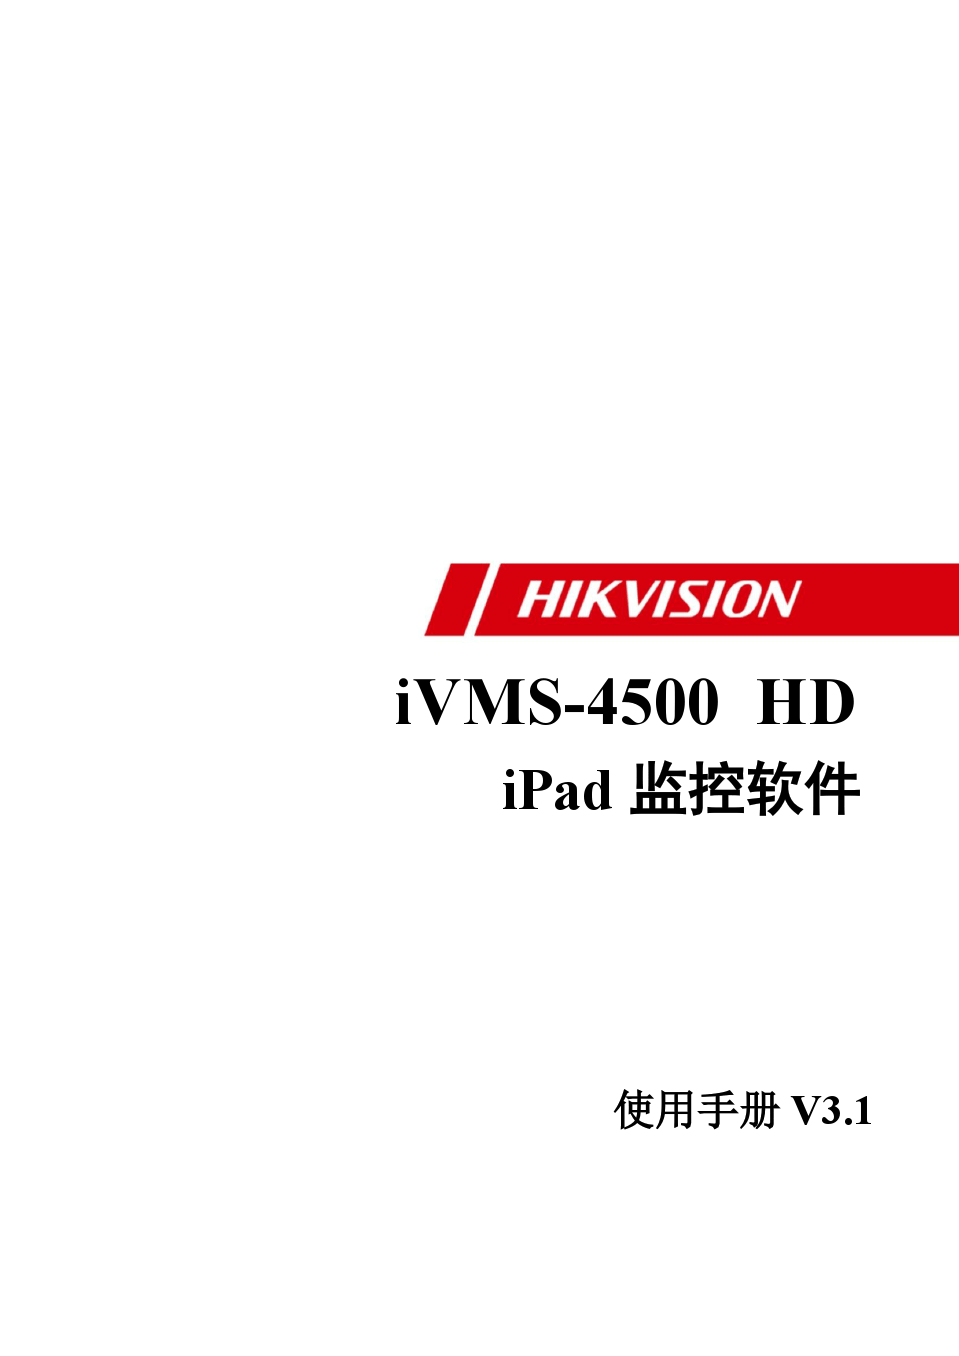 iVMS-4500 HD V3.1 iPad 用户手册